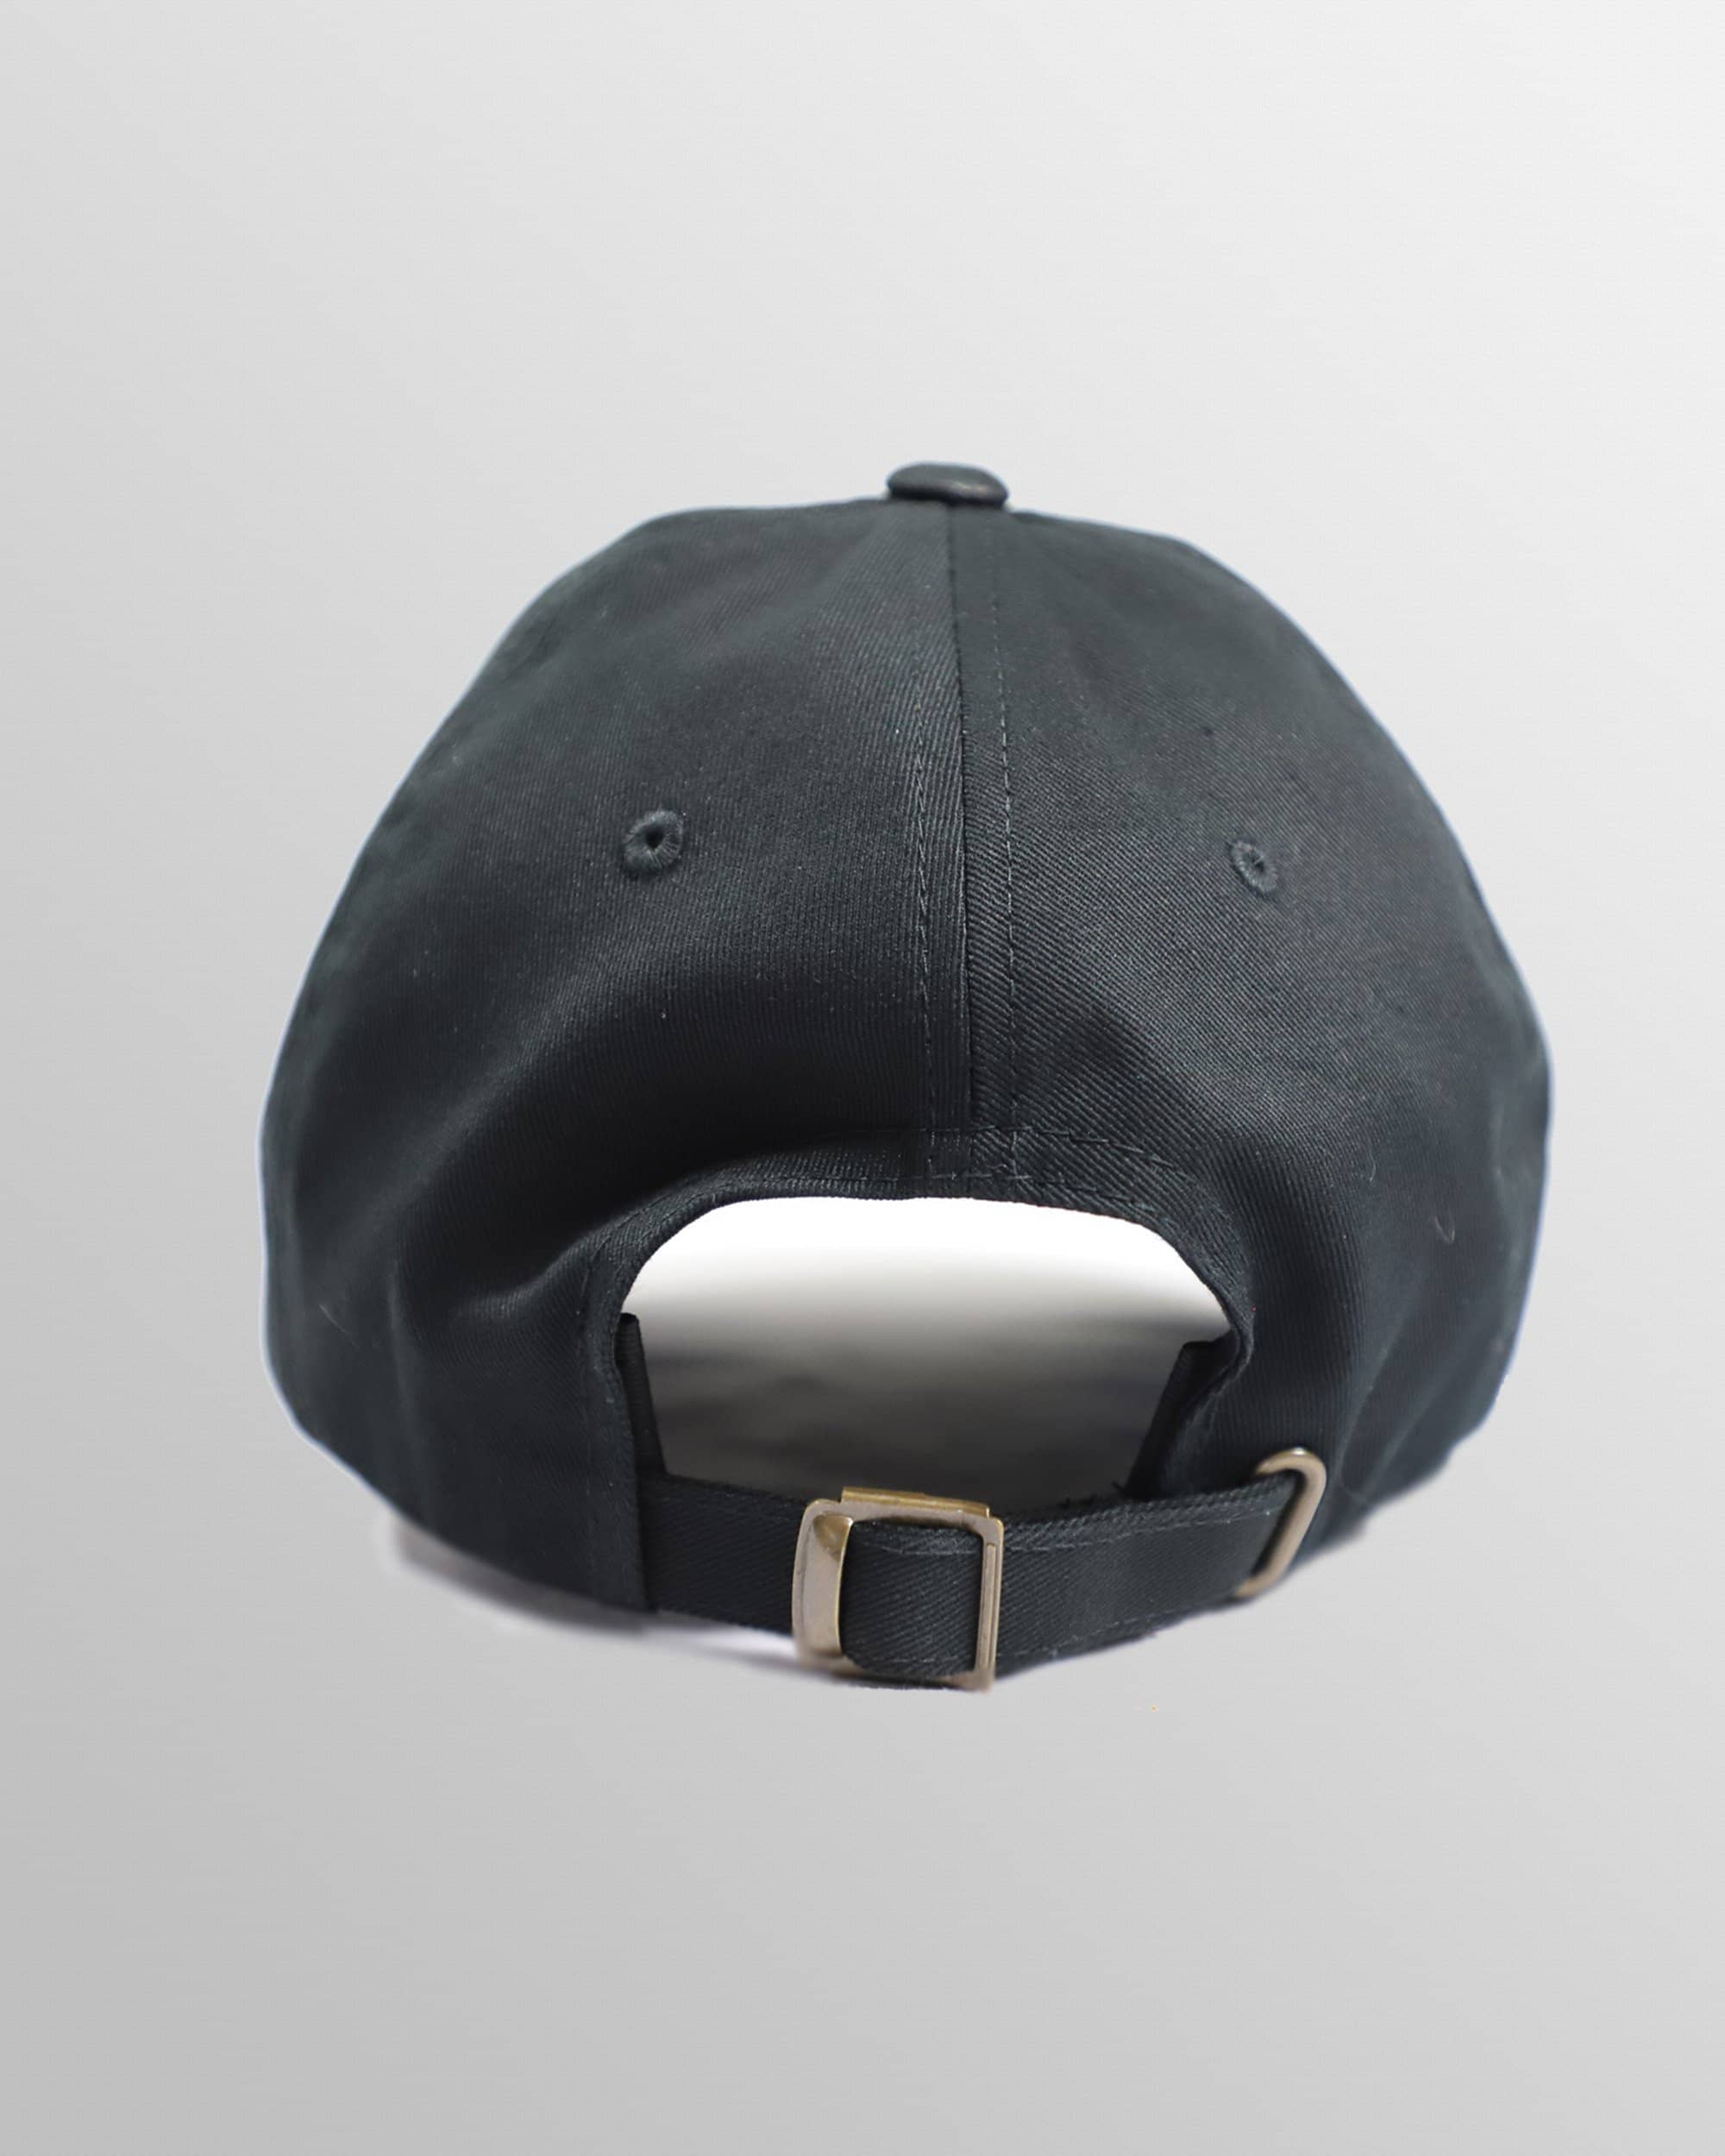 JoJo's Bizarre Adventure Menacing Hat - Enrique Armani Design